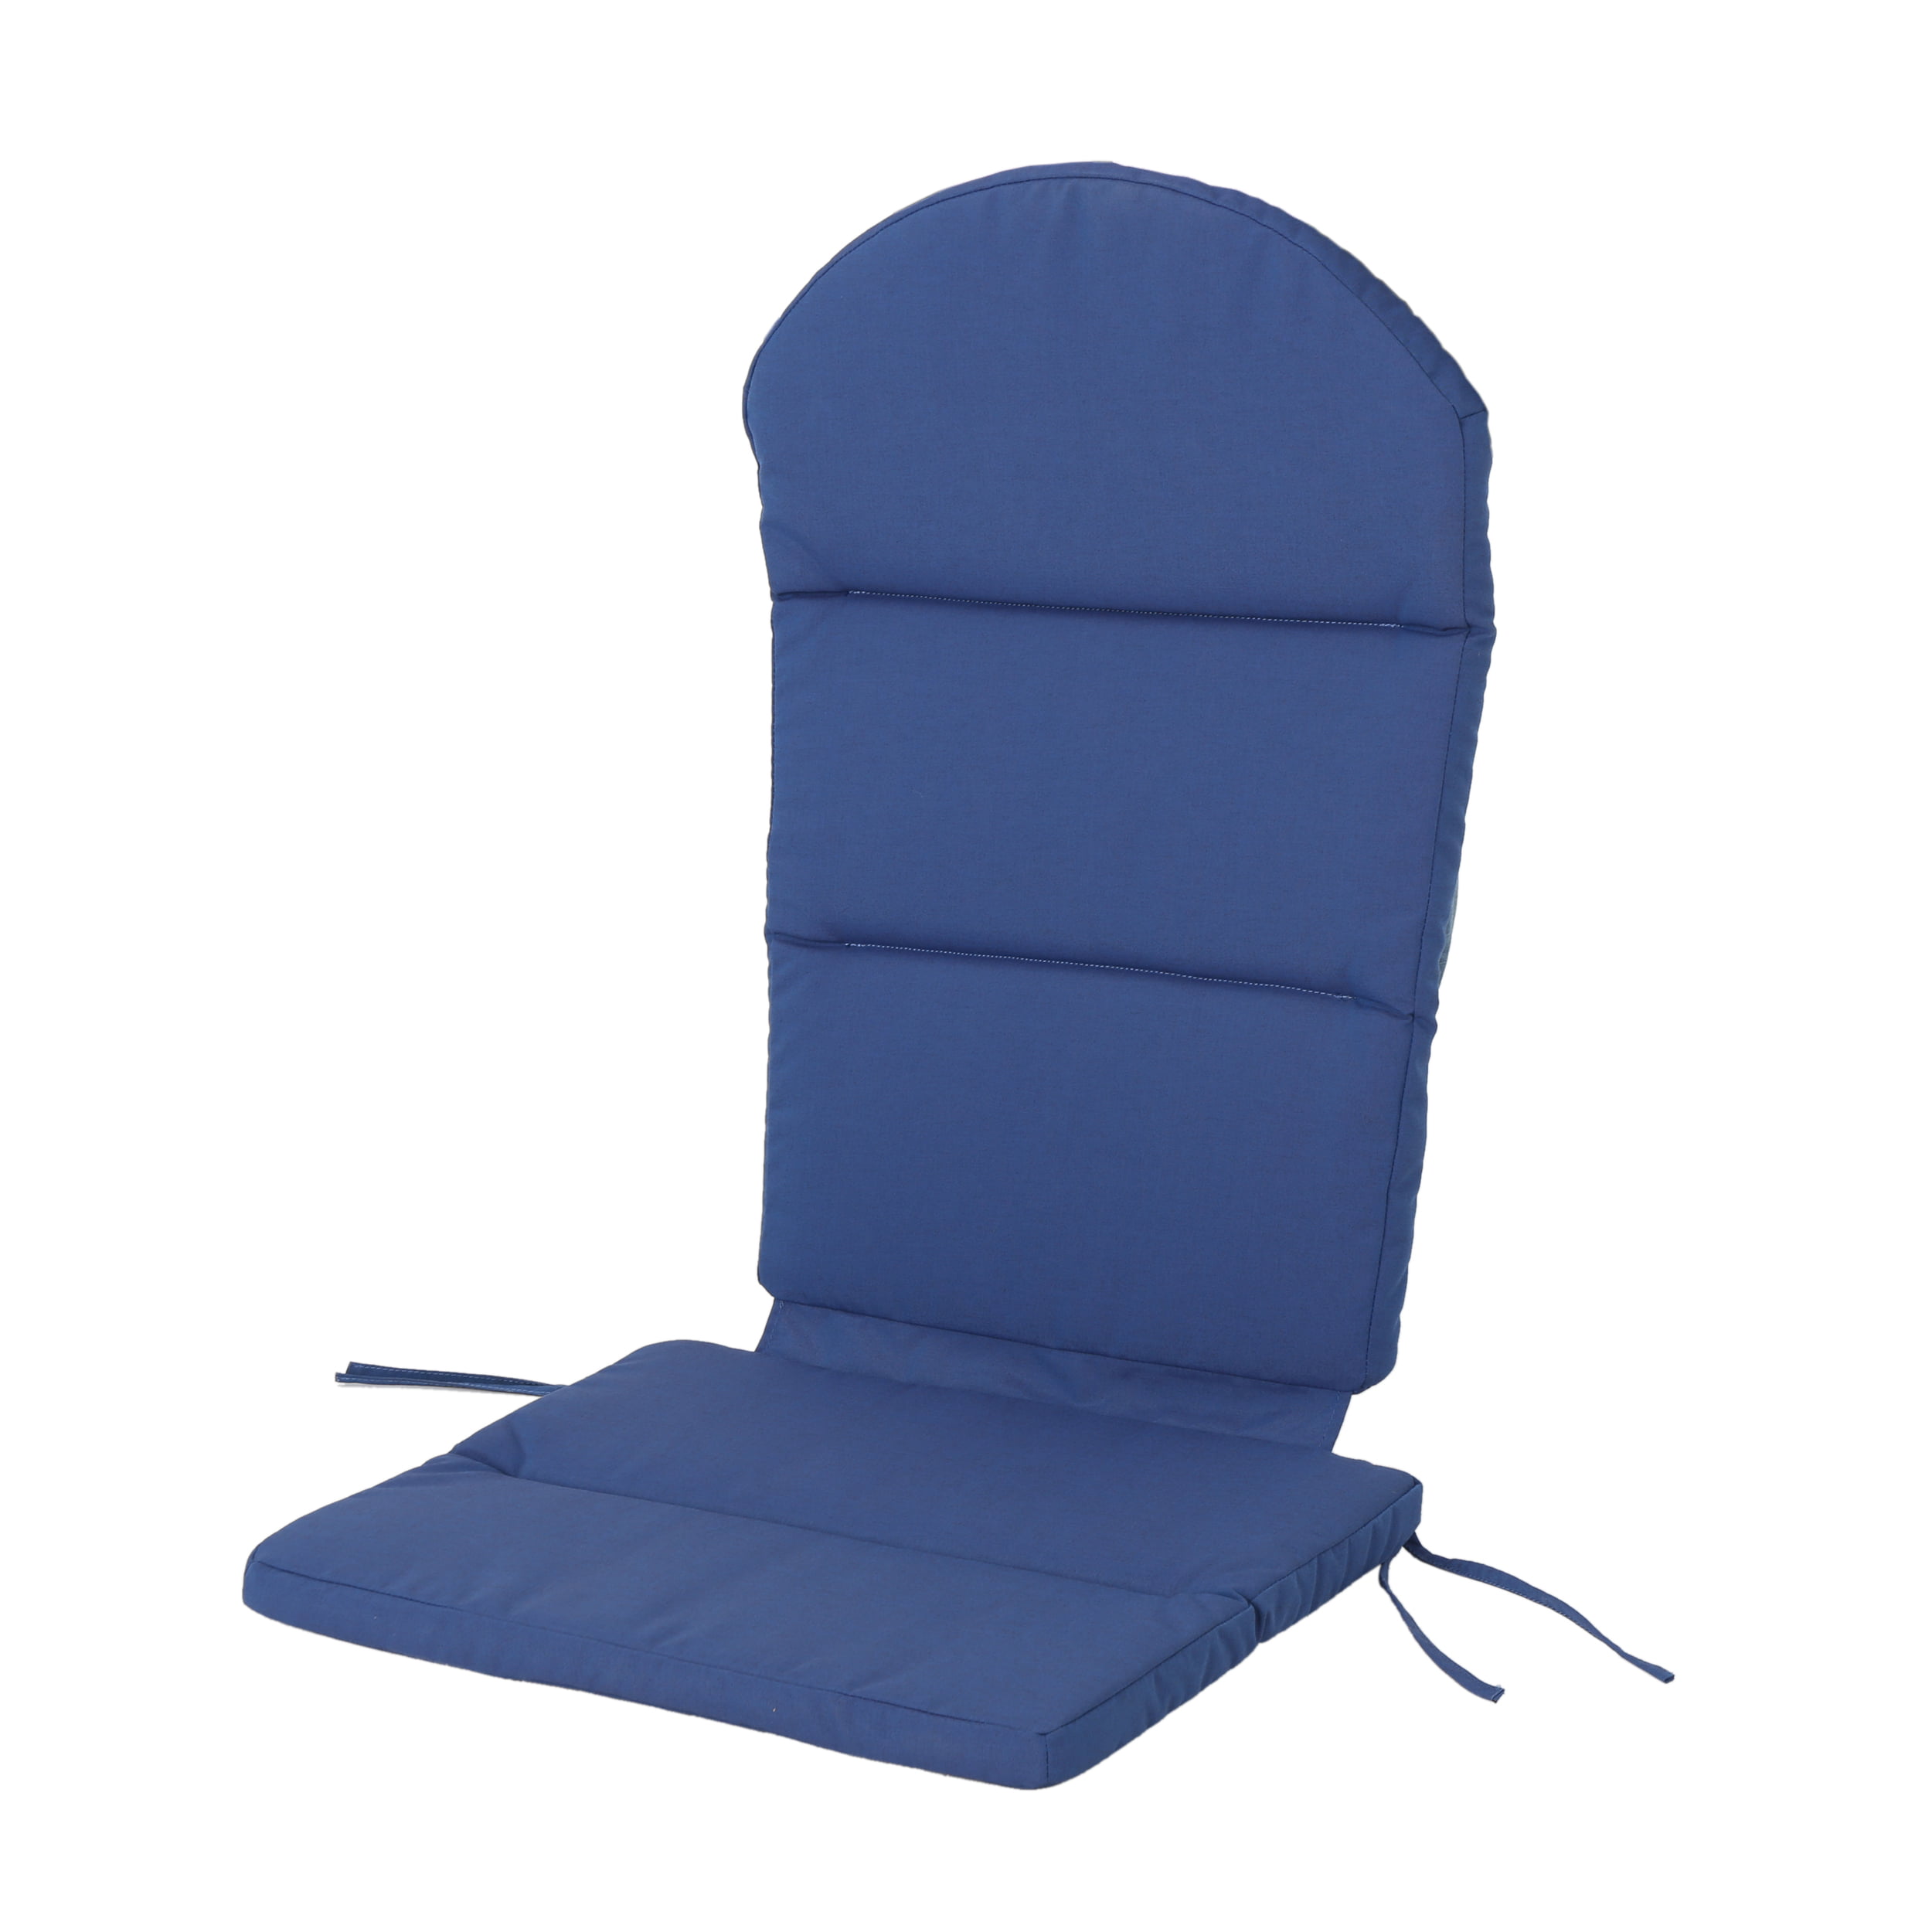 Reed Outdoor Adirondack Chair Cushion, Navy Blue - Walmart.com